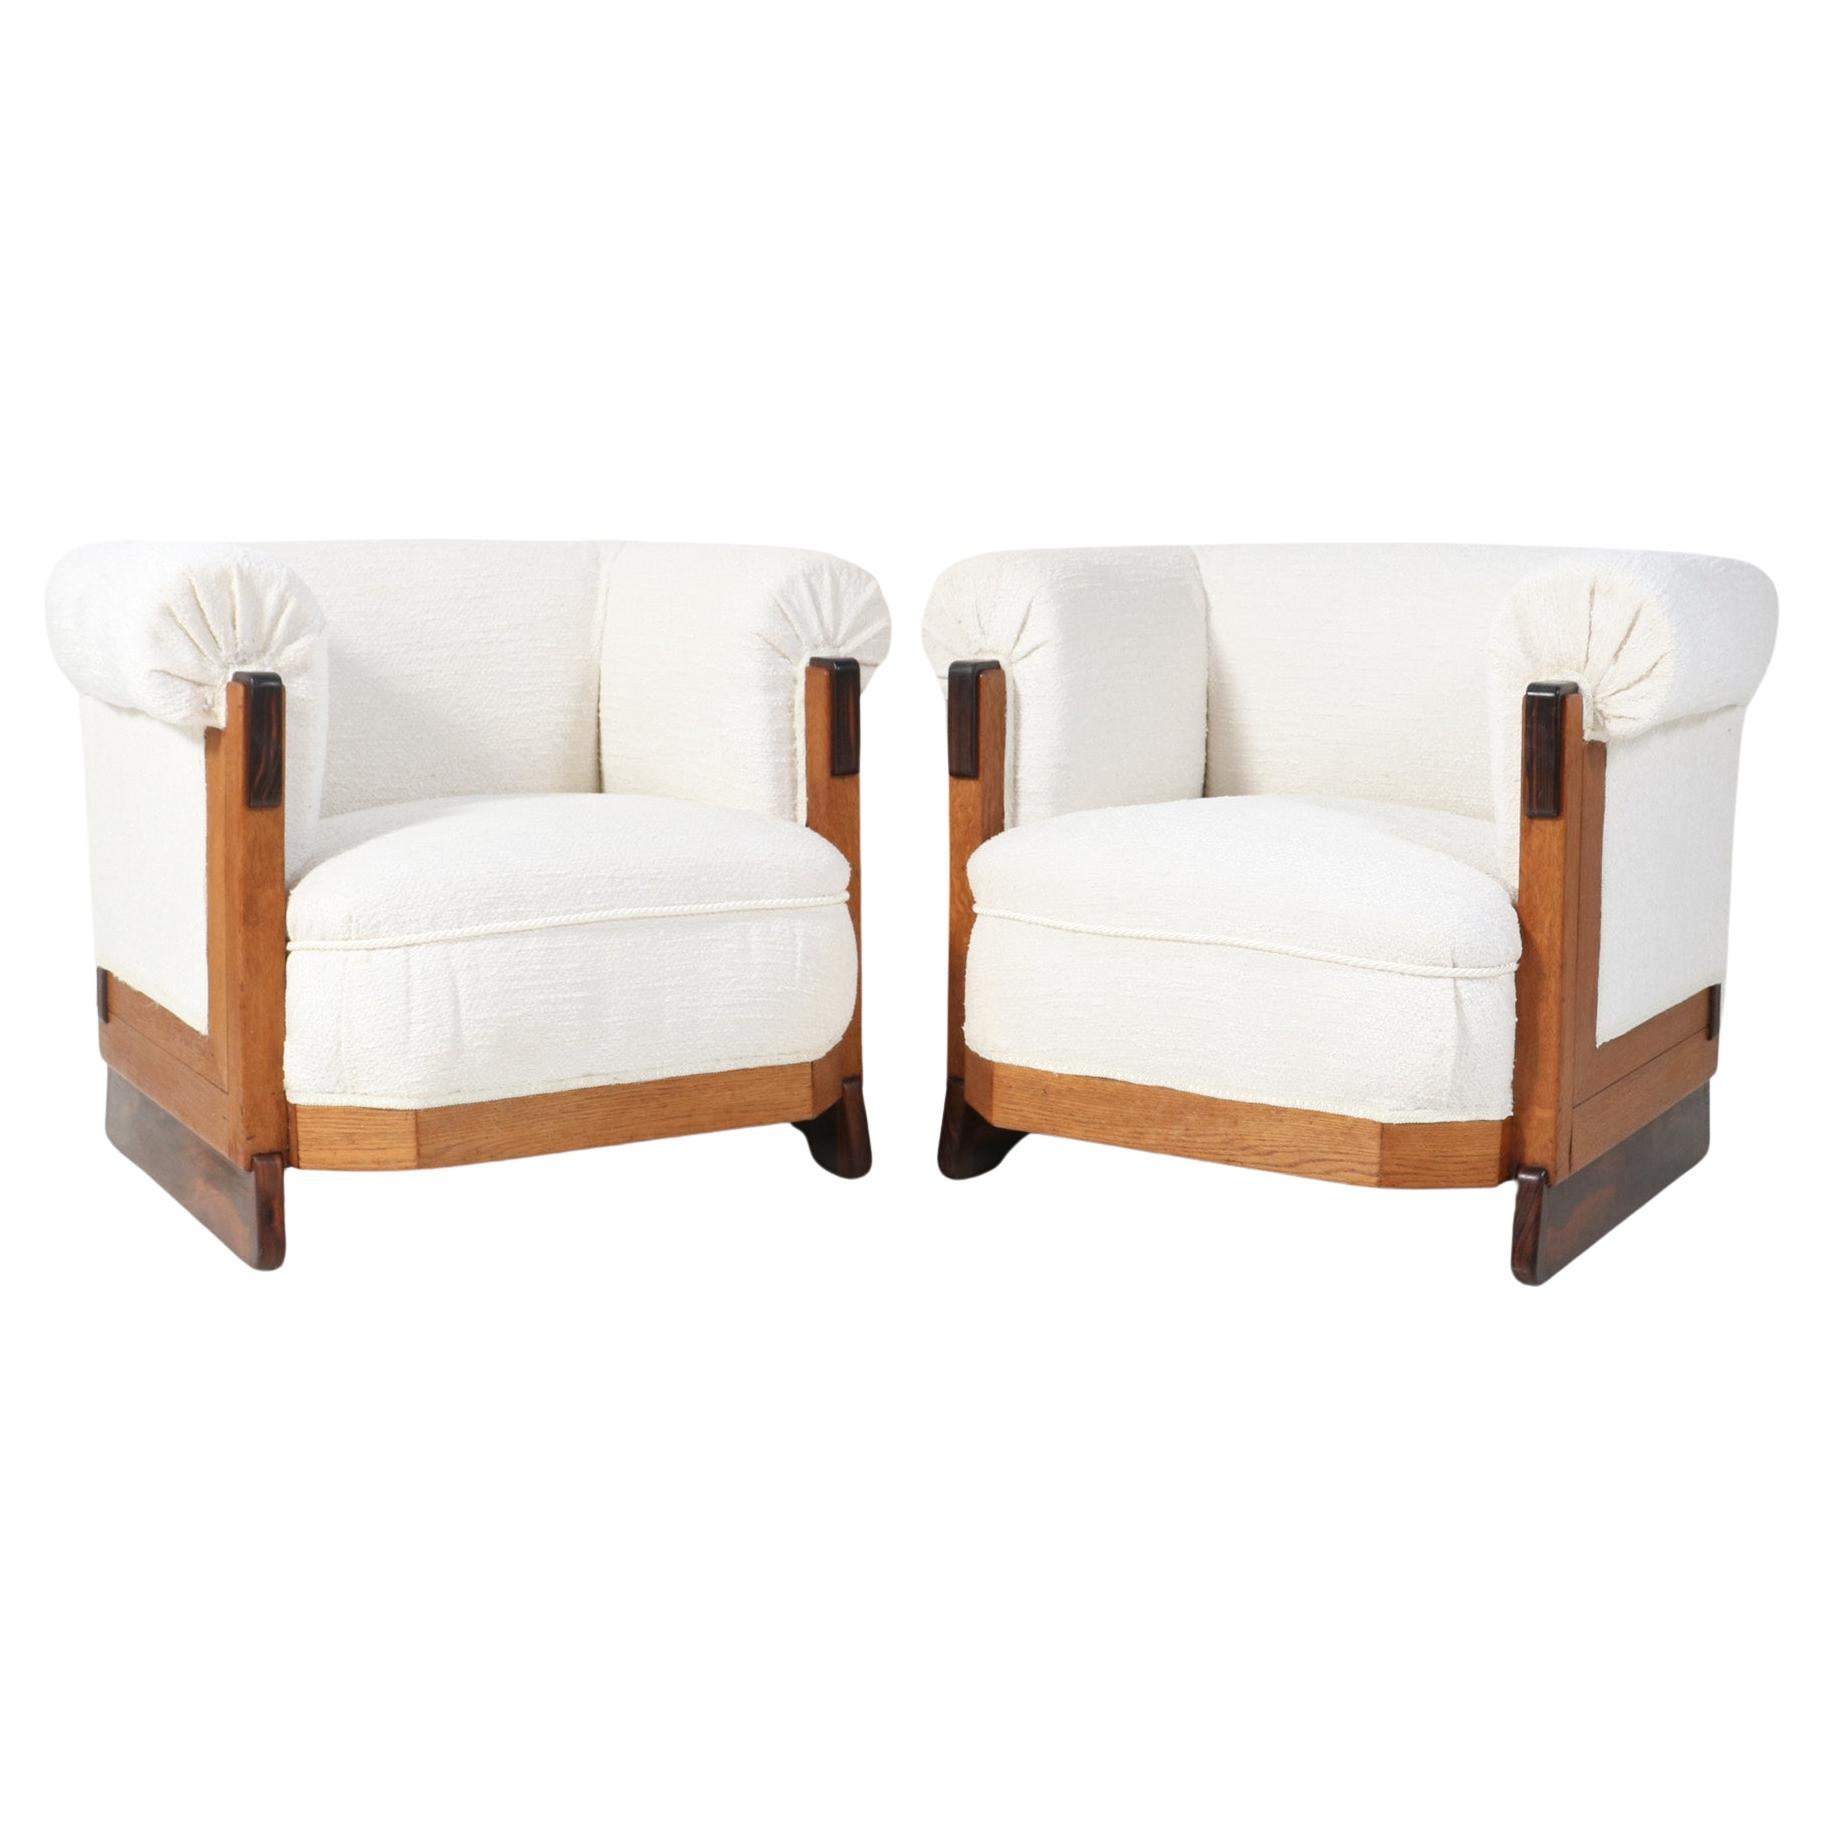 Two Art Deco Modernist Oak Lounge Chairs in Bouclé by Anton Lucas Leiden, 1920s For Sale